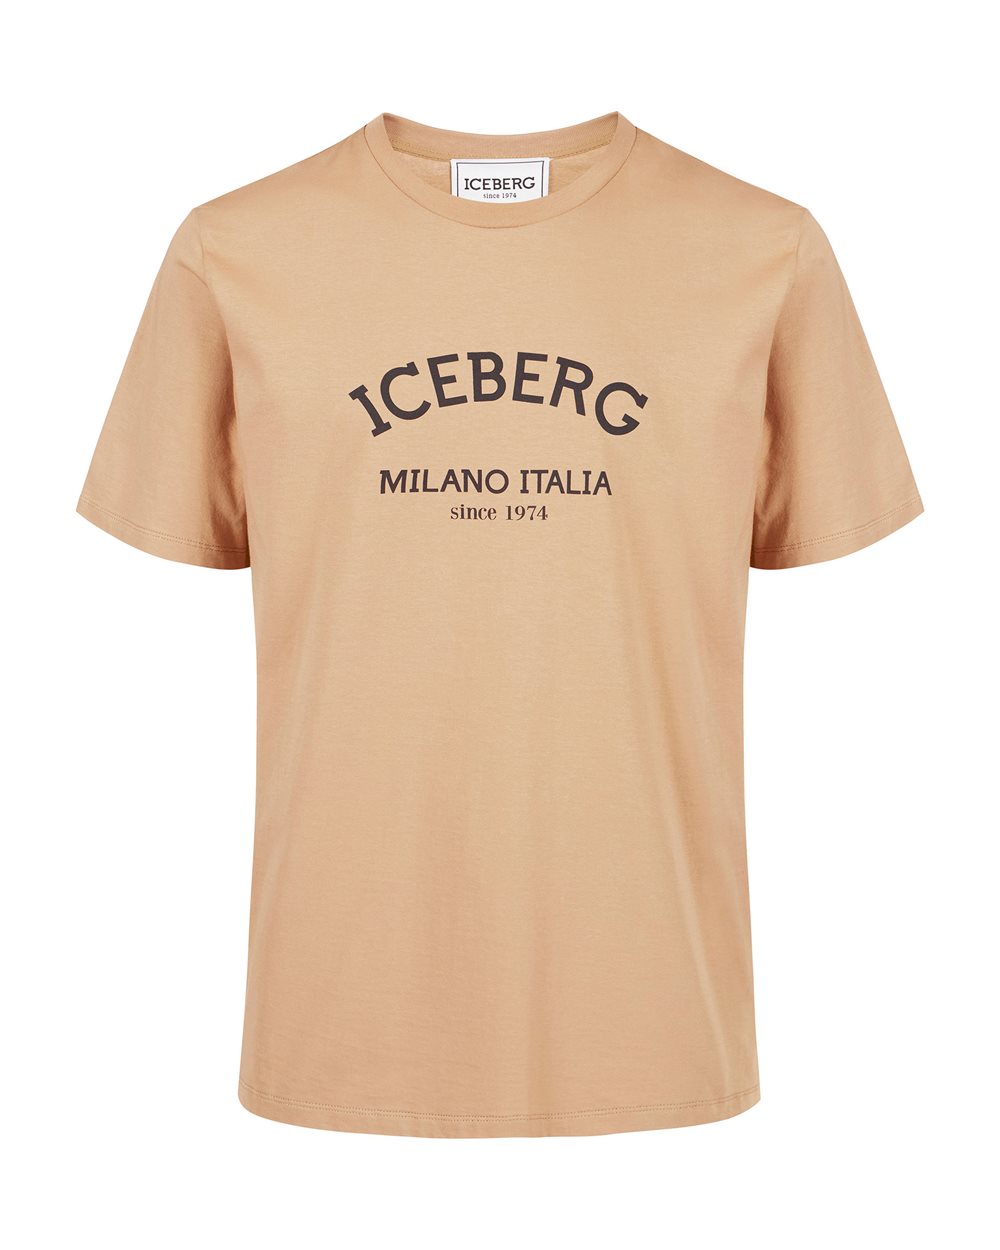 T-shirt with Iceberg logo - carosello preview uomo | Iceberg - Official Website